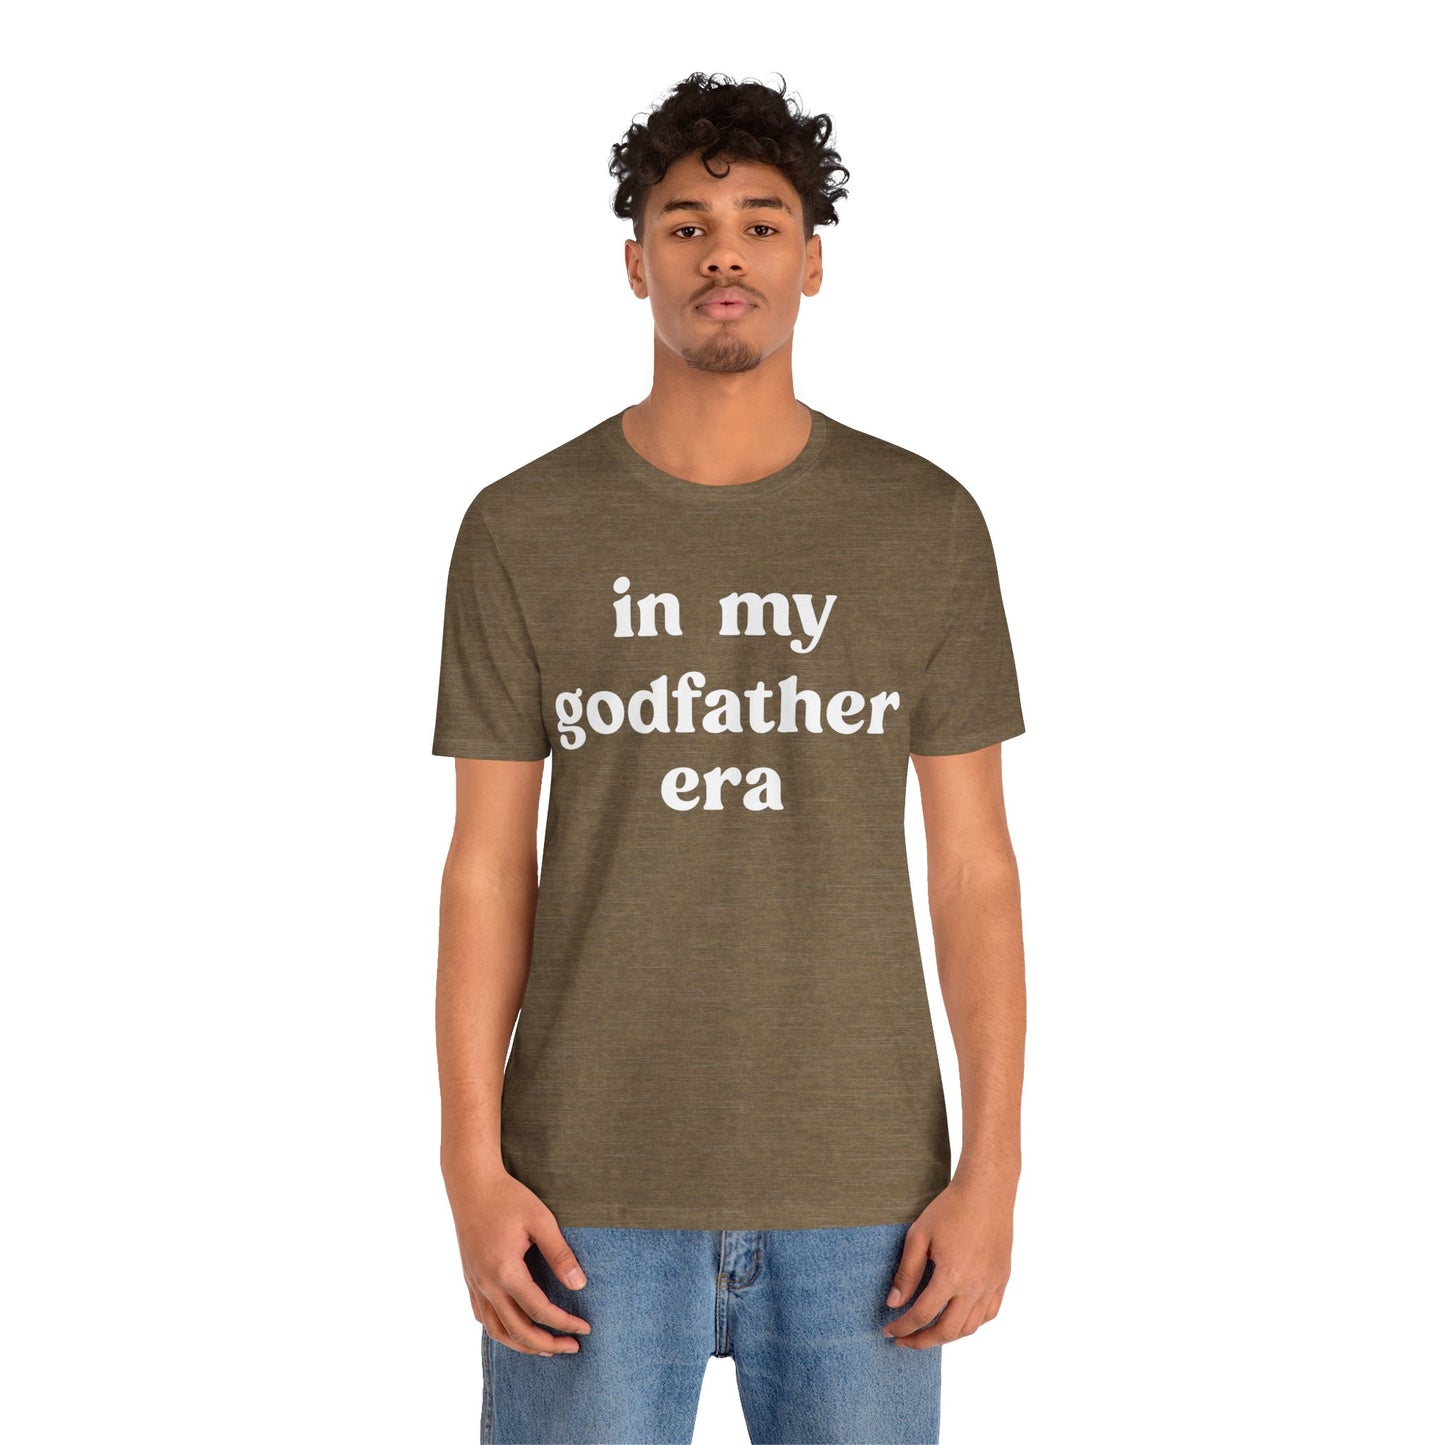 In My Godfather Era Shirt, Godfather Shirt, God Father tshirt, Fathers Day Shirt, Baptism Godfather, Best Friend Gift, T1128